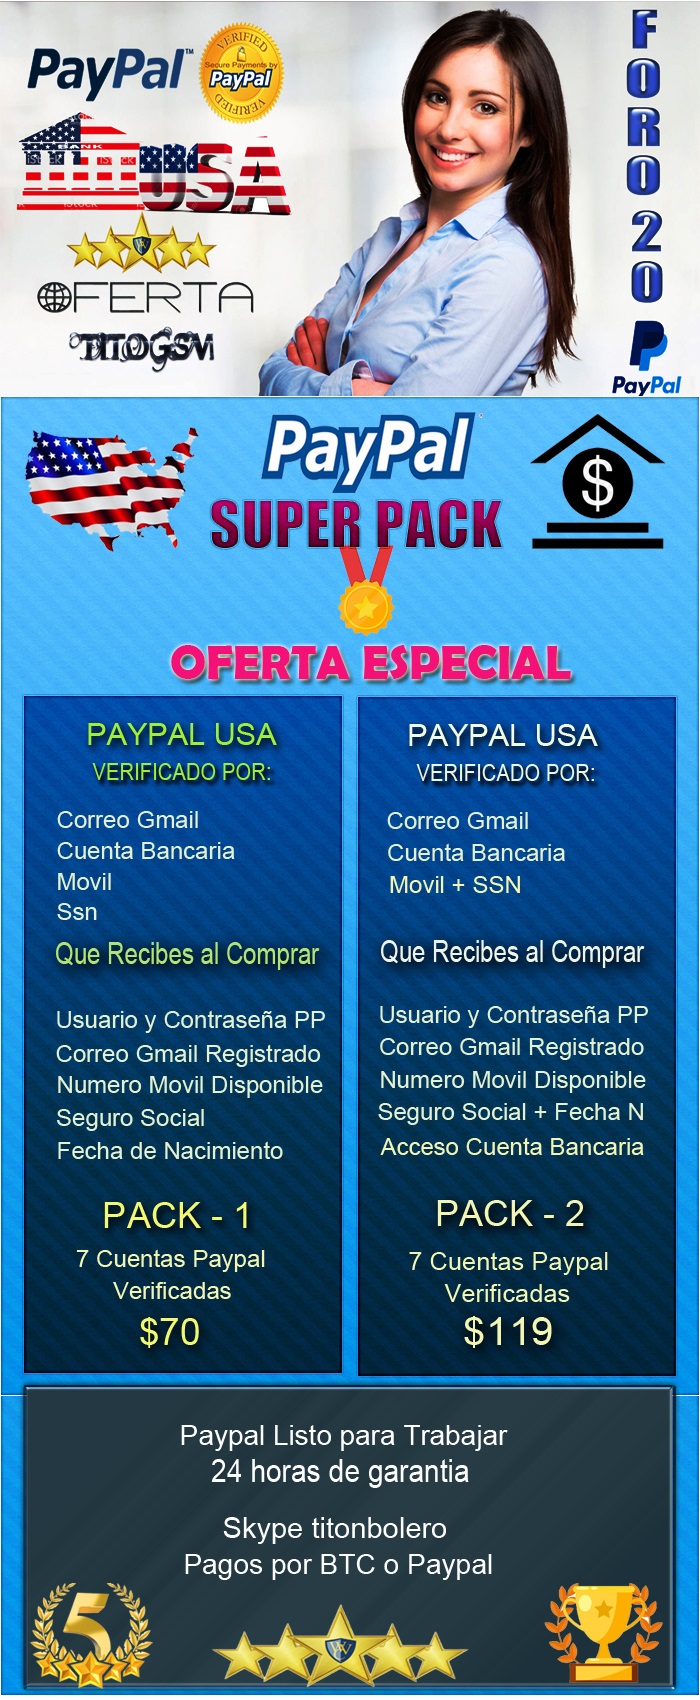 paypal foro20 oferta especial.jpg